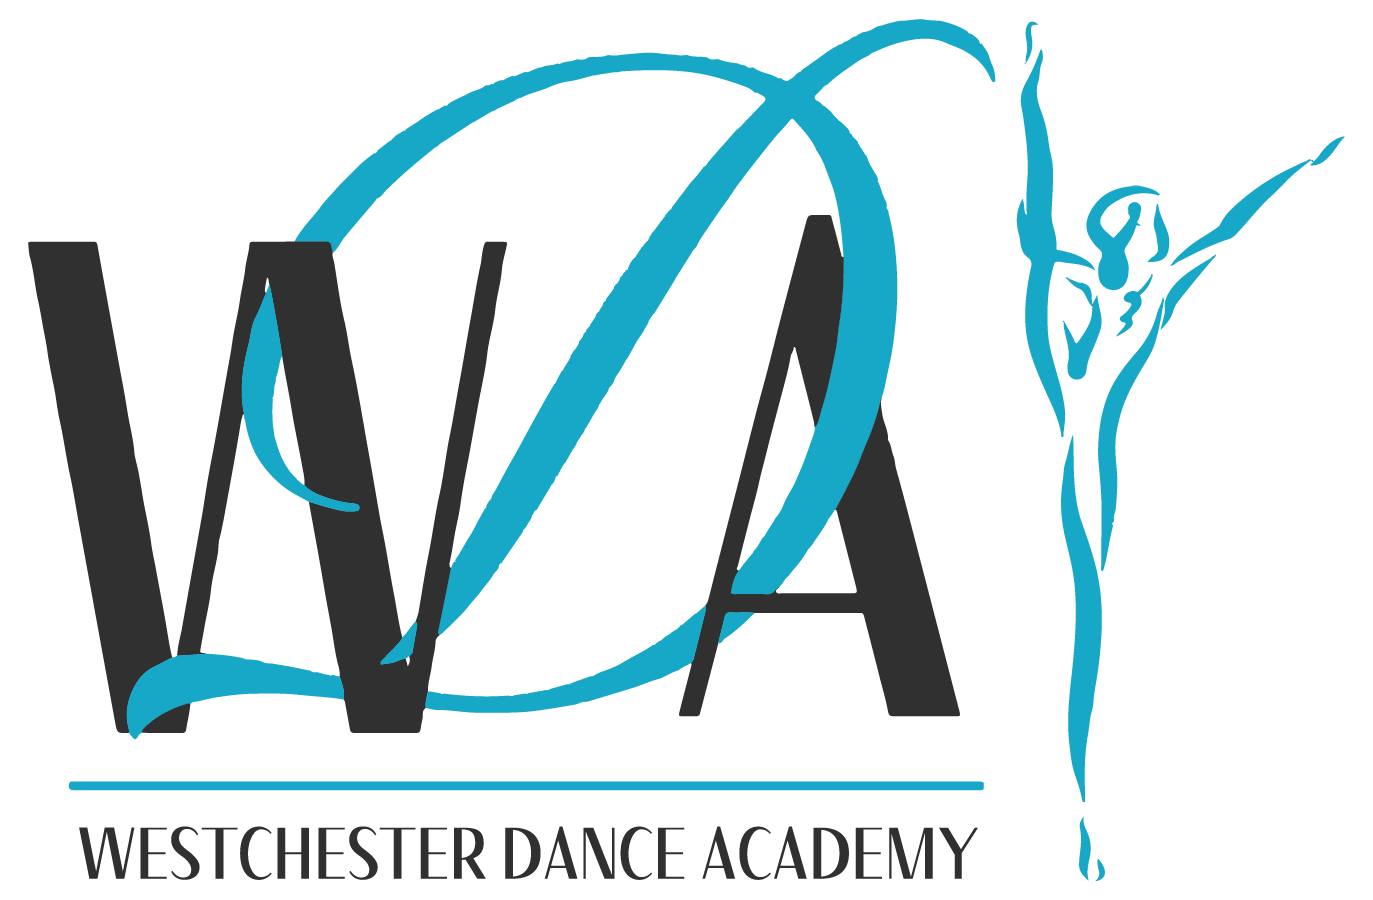 White Ballerina Dance Classes Academy Ballet Logo Template | PosterMyWall